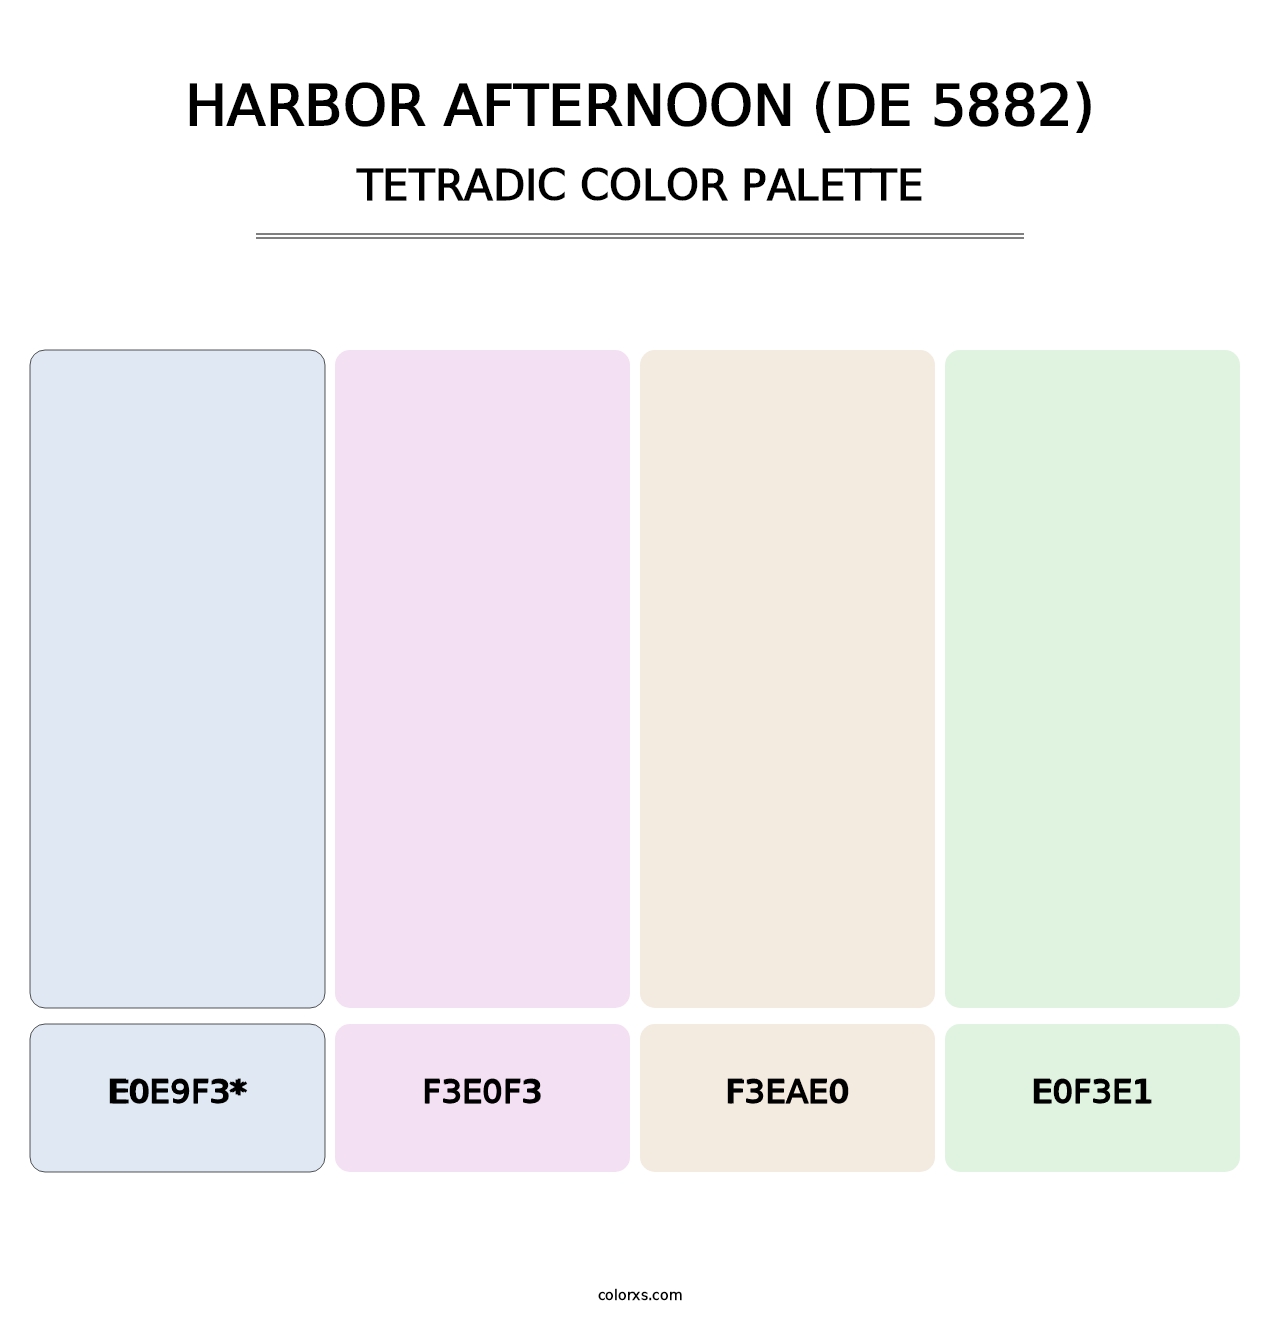 Harbor Afternoon (DE 5882) - Tetradic Color Palette